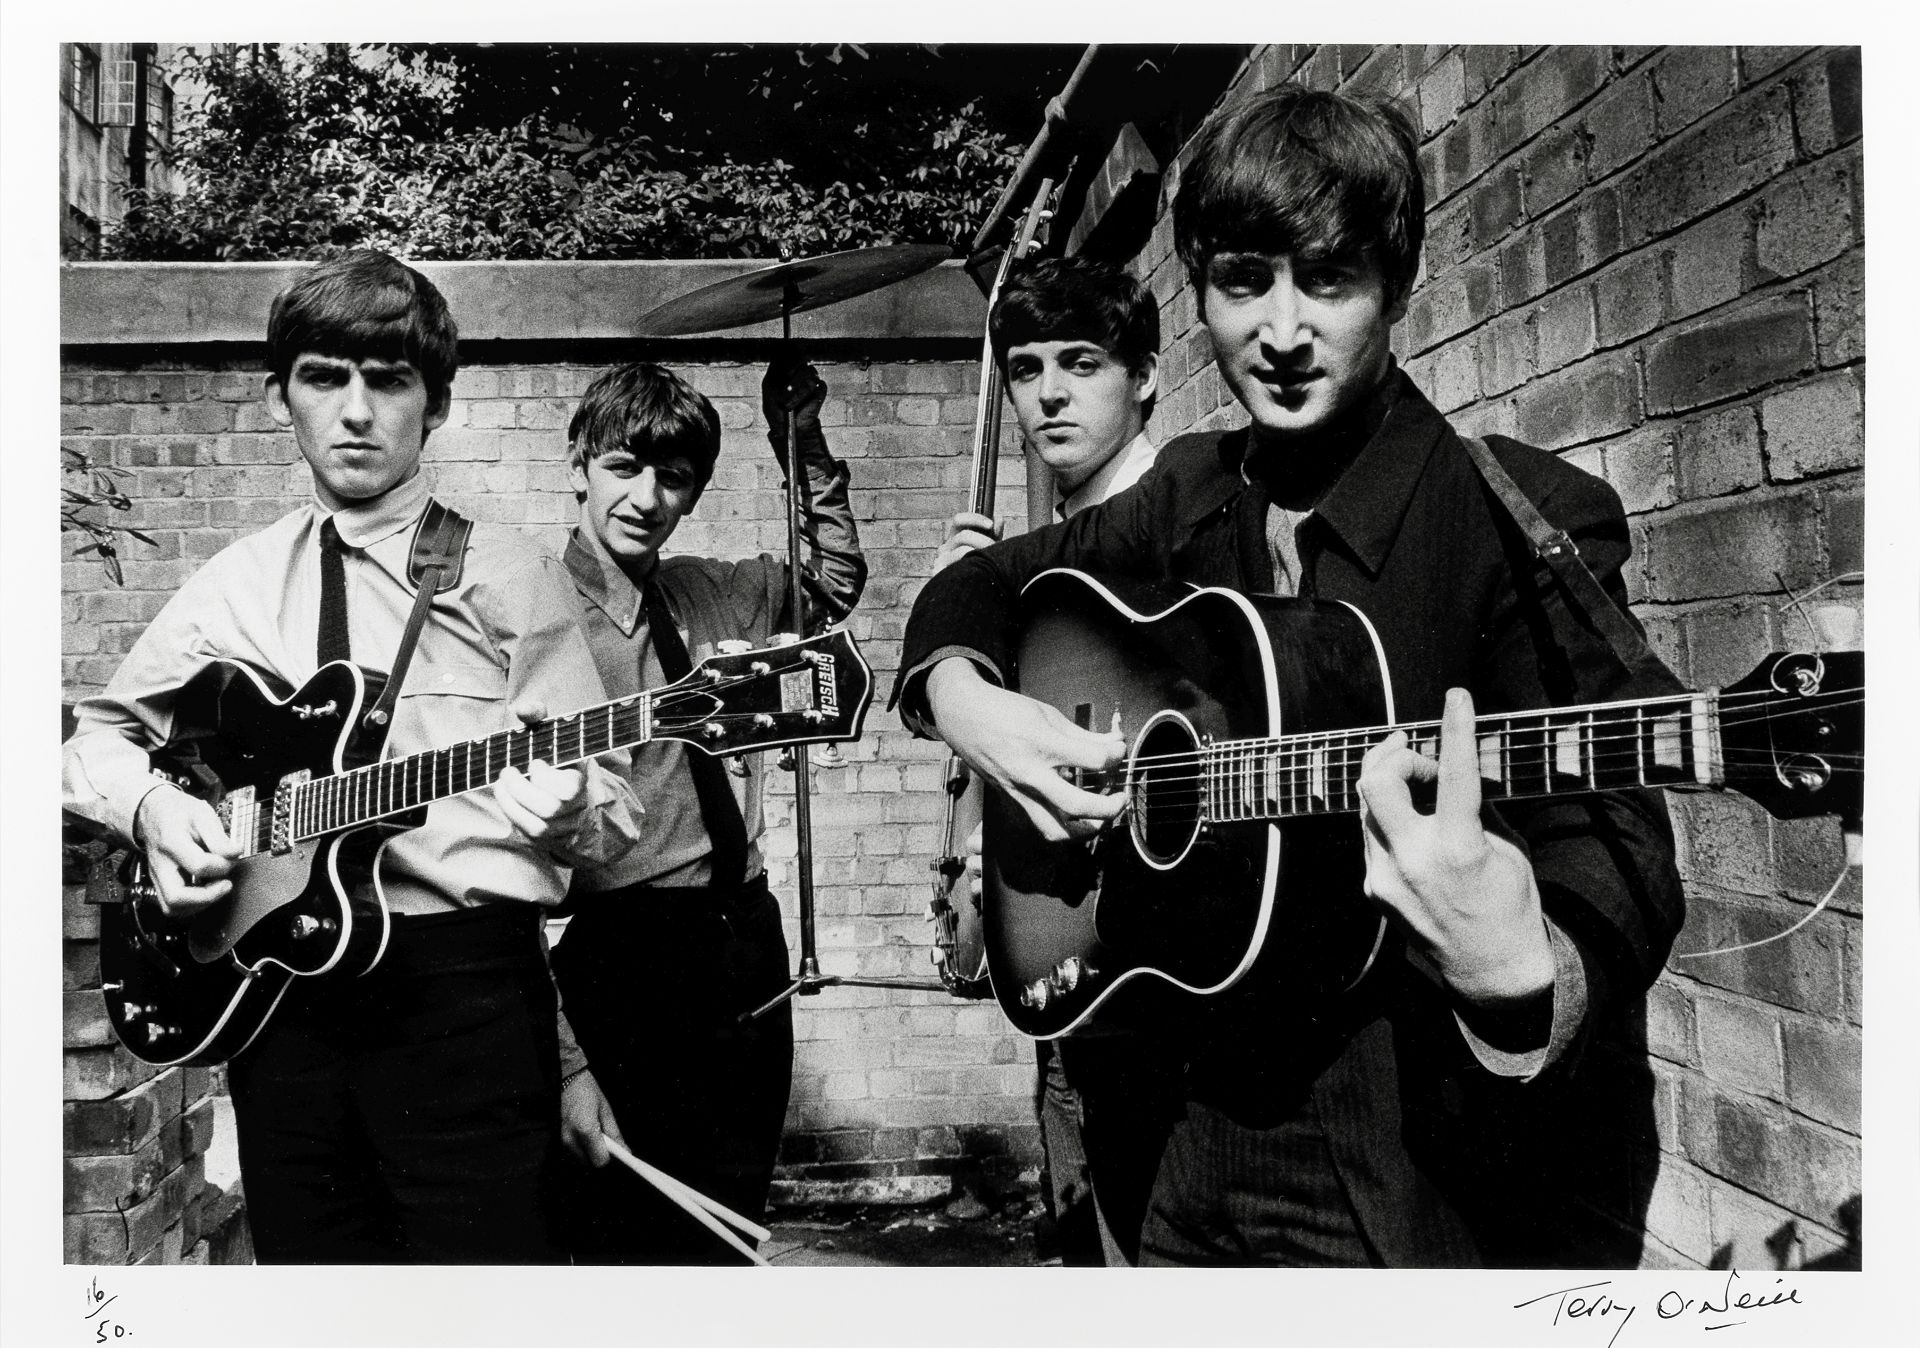 Terry O'Neill (British, 1938-2019); The Beatles, Abbey Road Backyard;